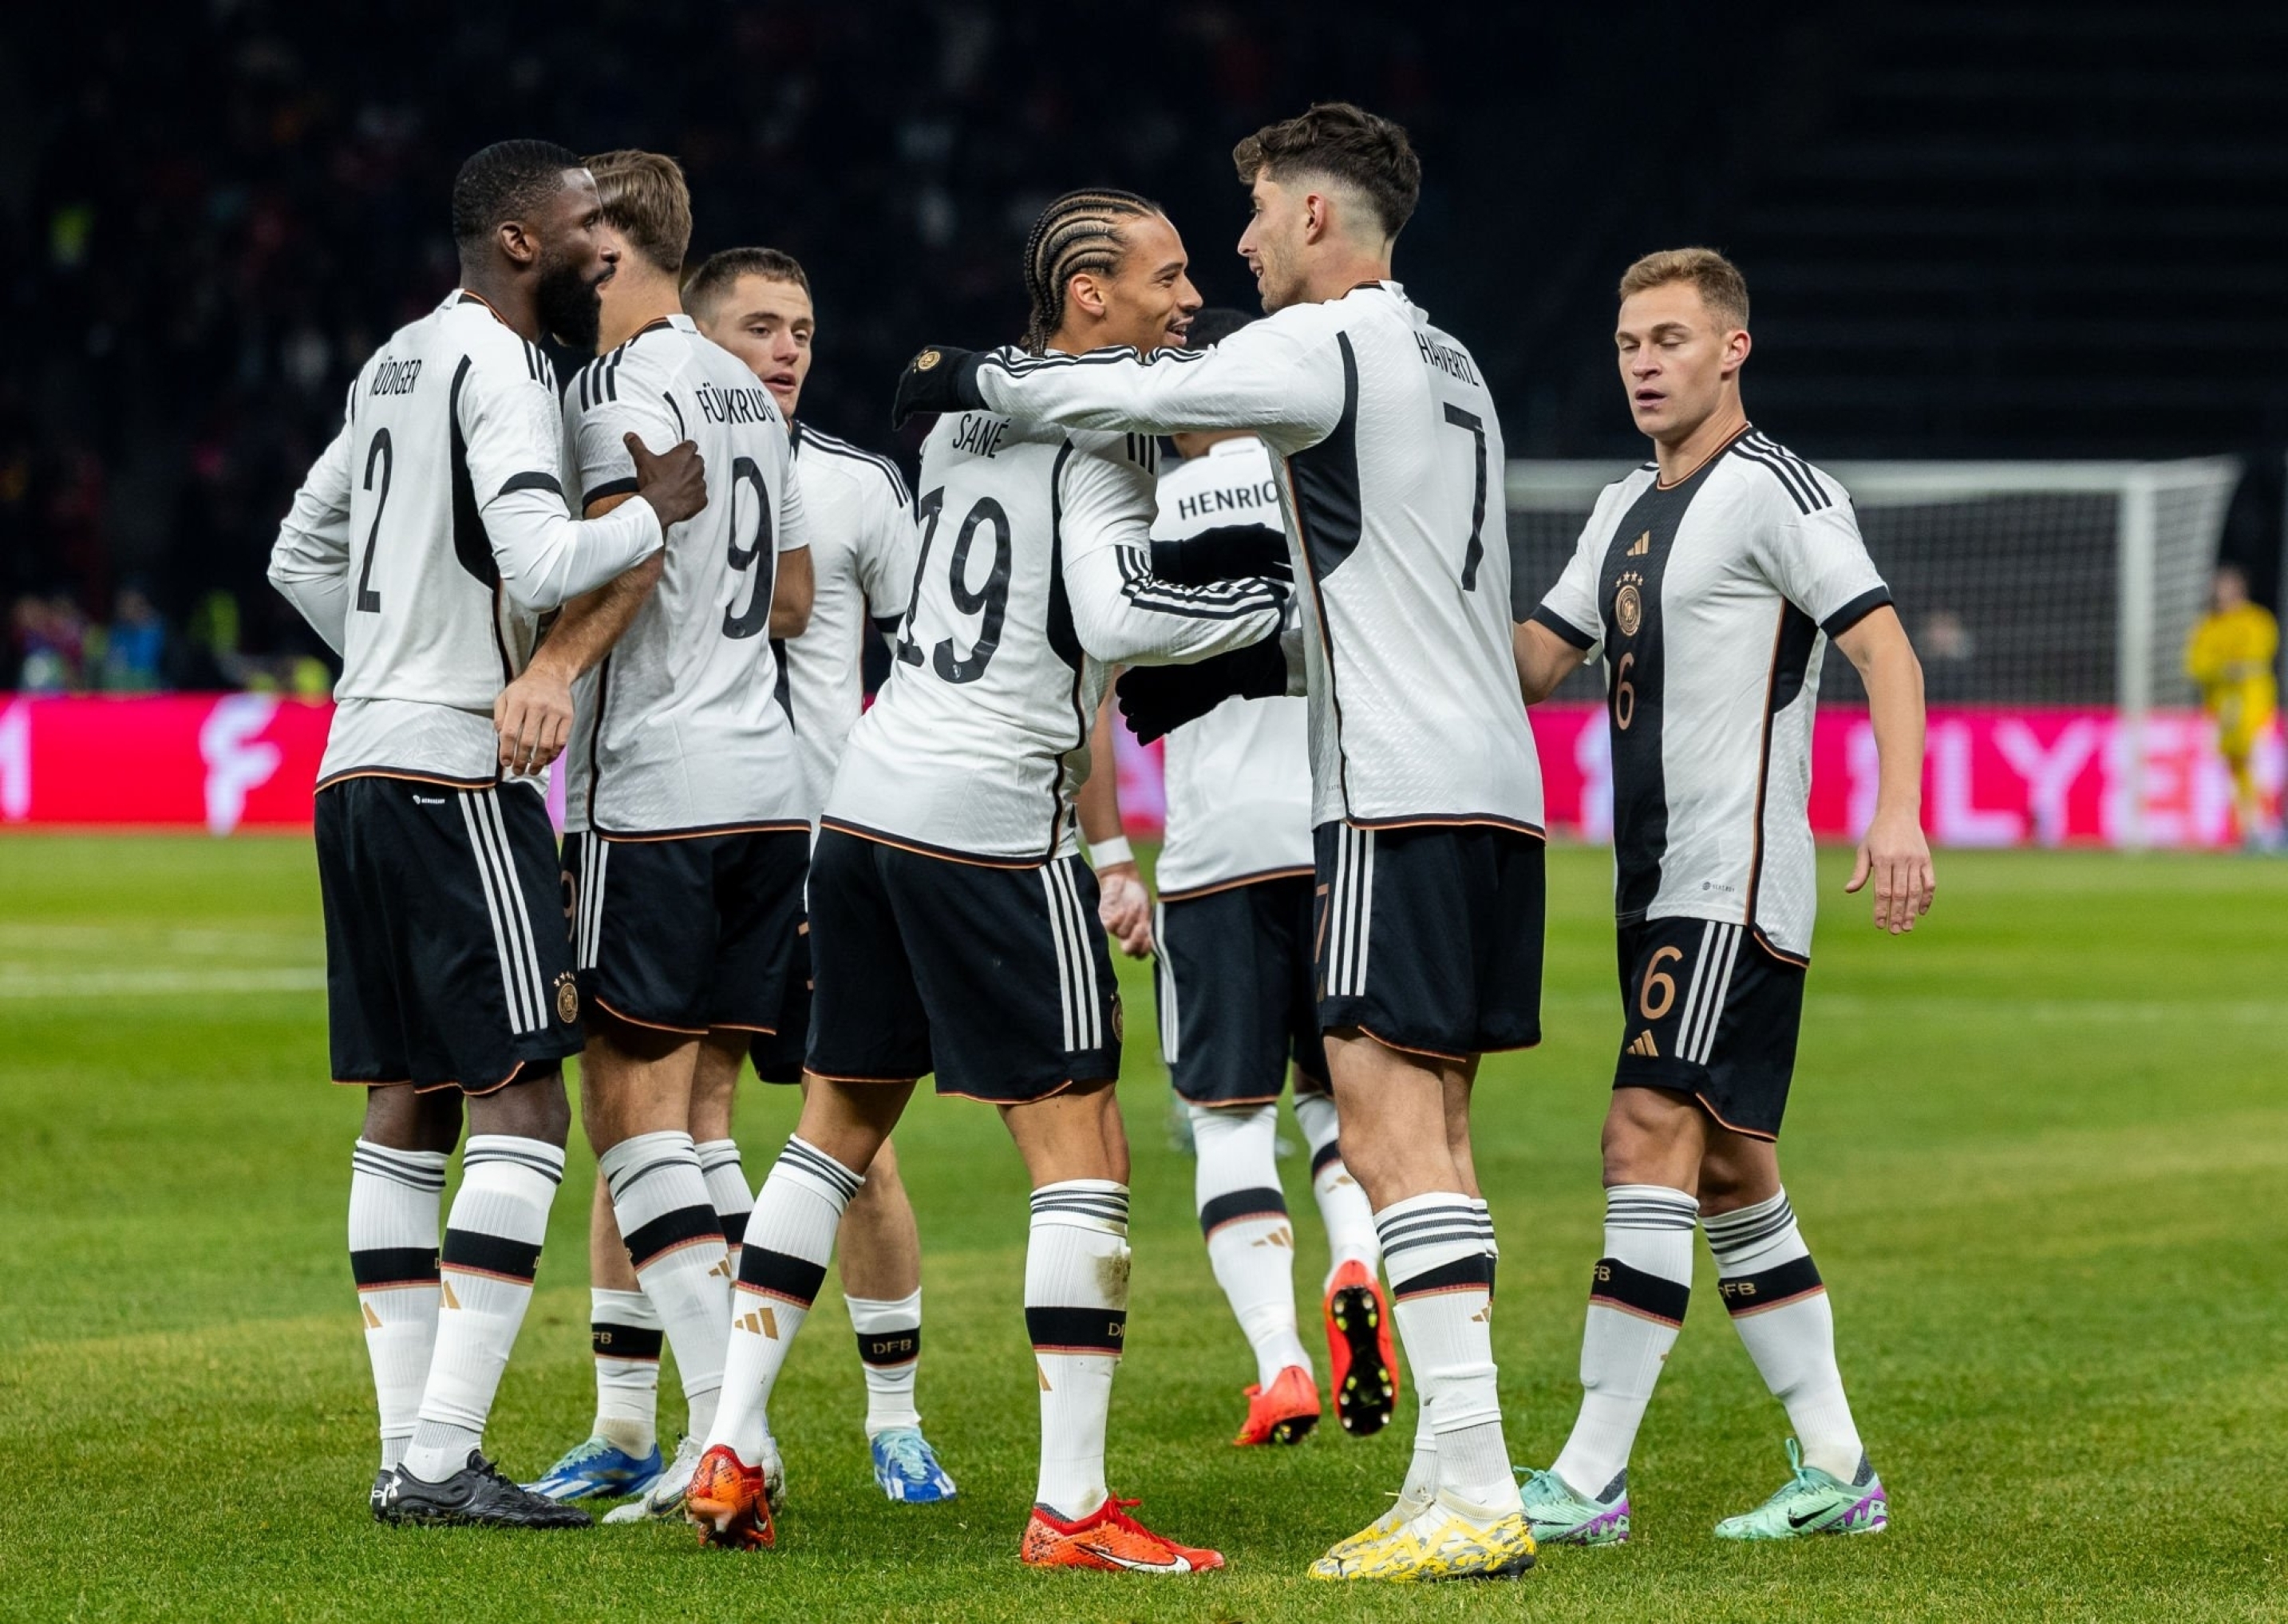 Germany vs Austria - GER vs AUT - Die Mannschaft are looking to go back to winning ways after 2-match winless run in International Friendlies